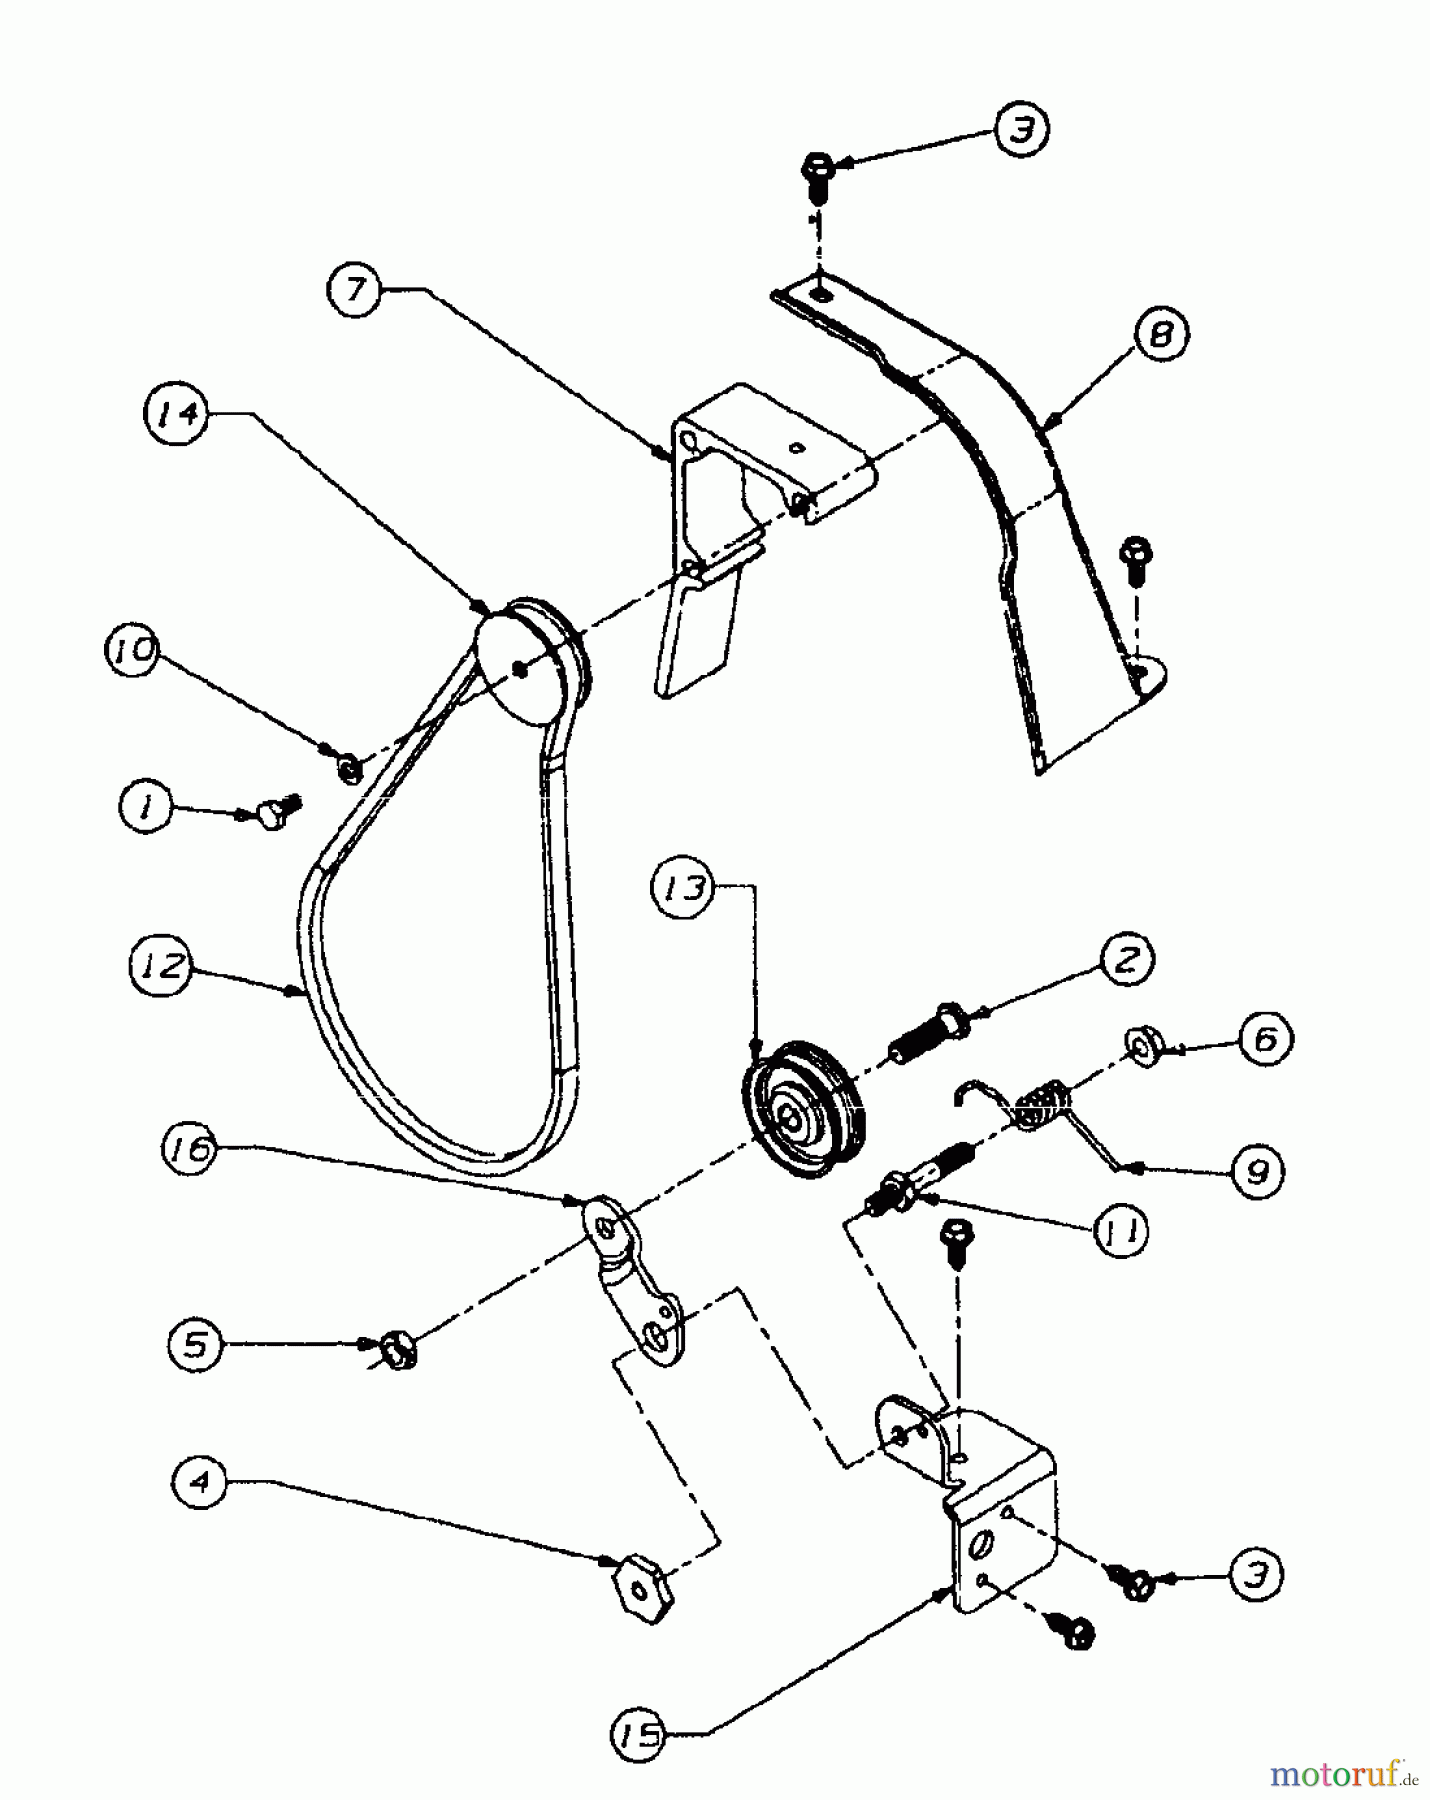  Gutbrod Leaf blower, Blower vac LSH 66-80 04201.04  (1996) Belts, Tension pulley